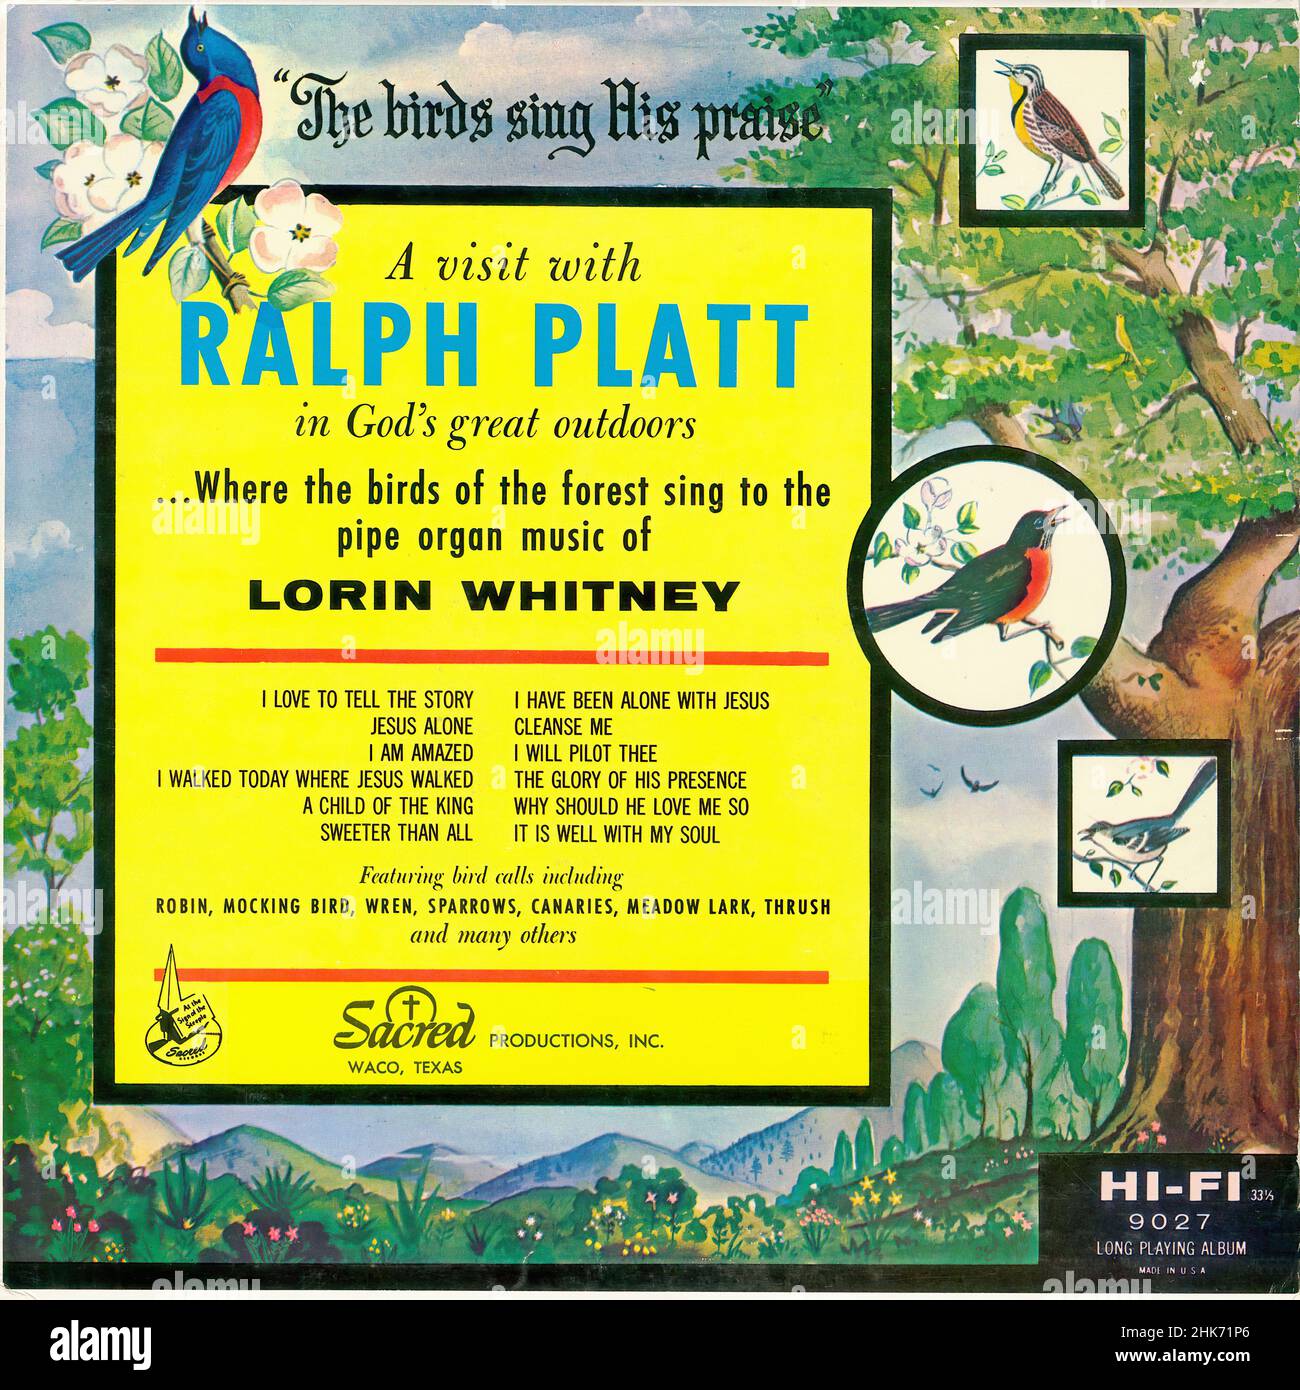 The Birds Sing His Praise -  Vintage American Christian Vinyl Album Stock Photo